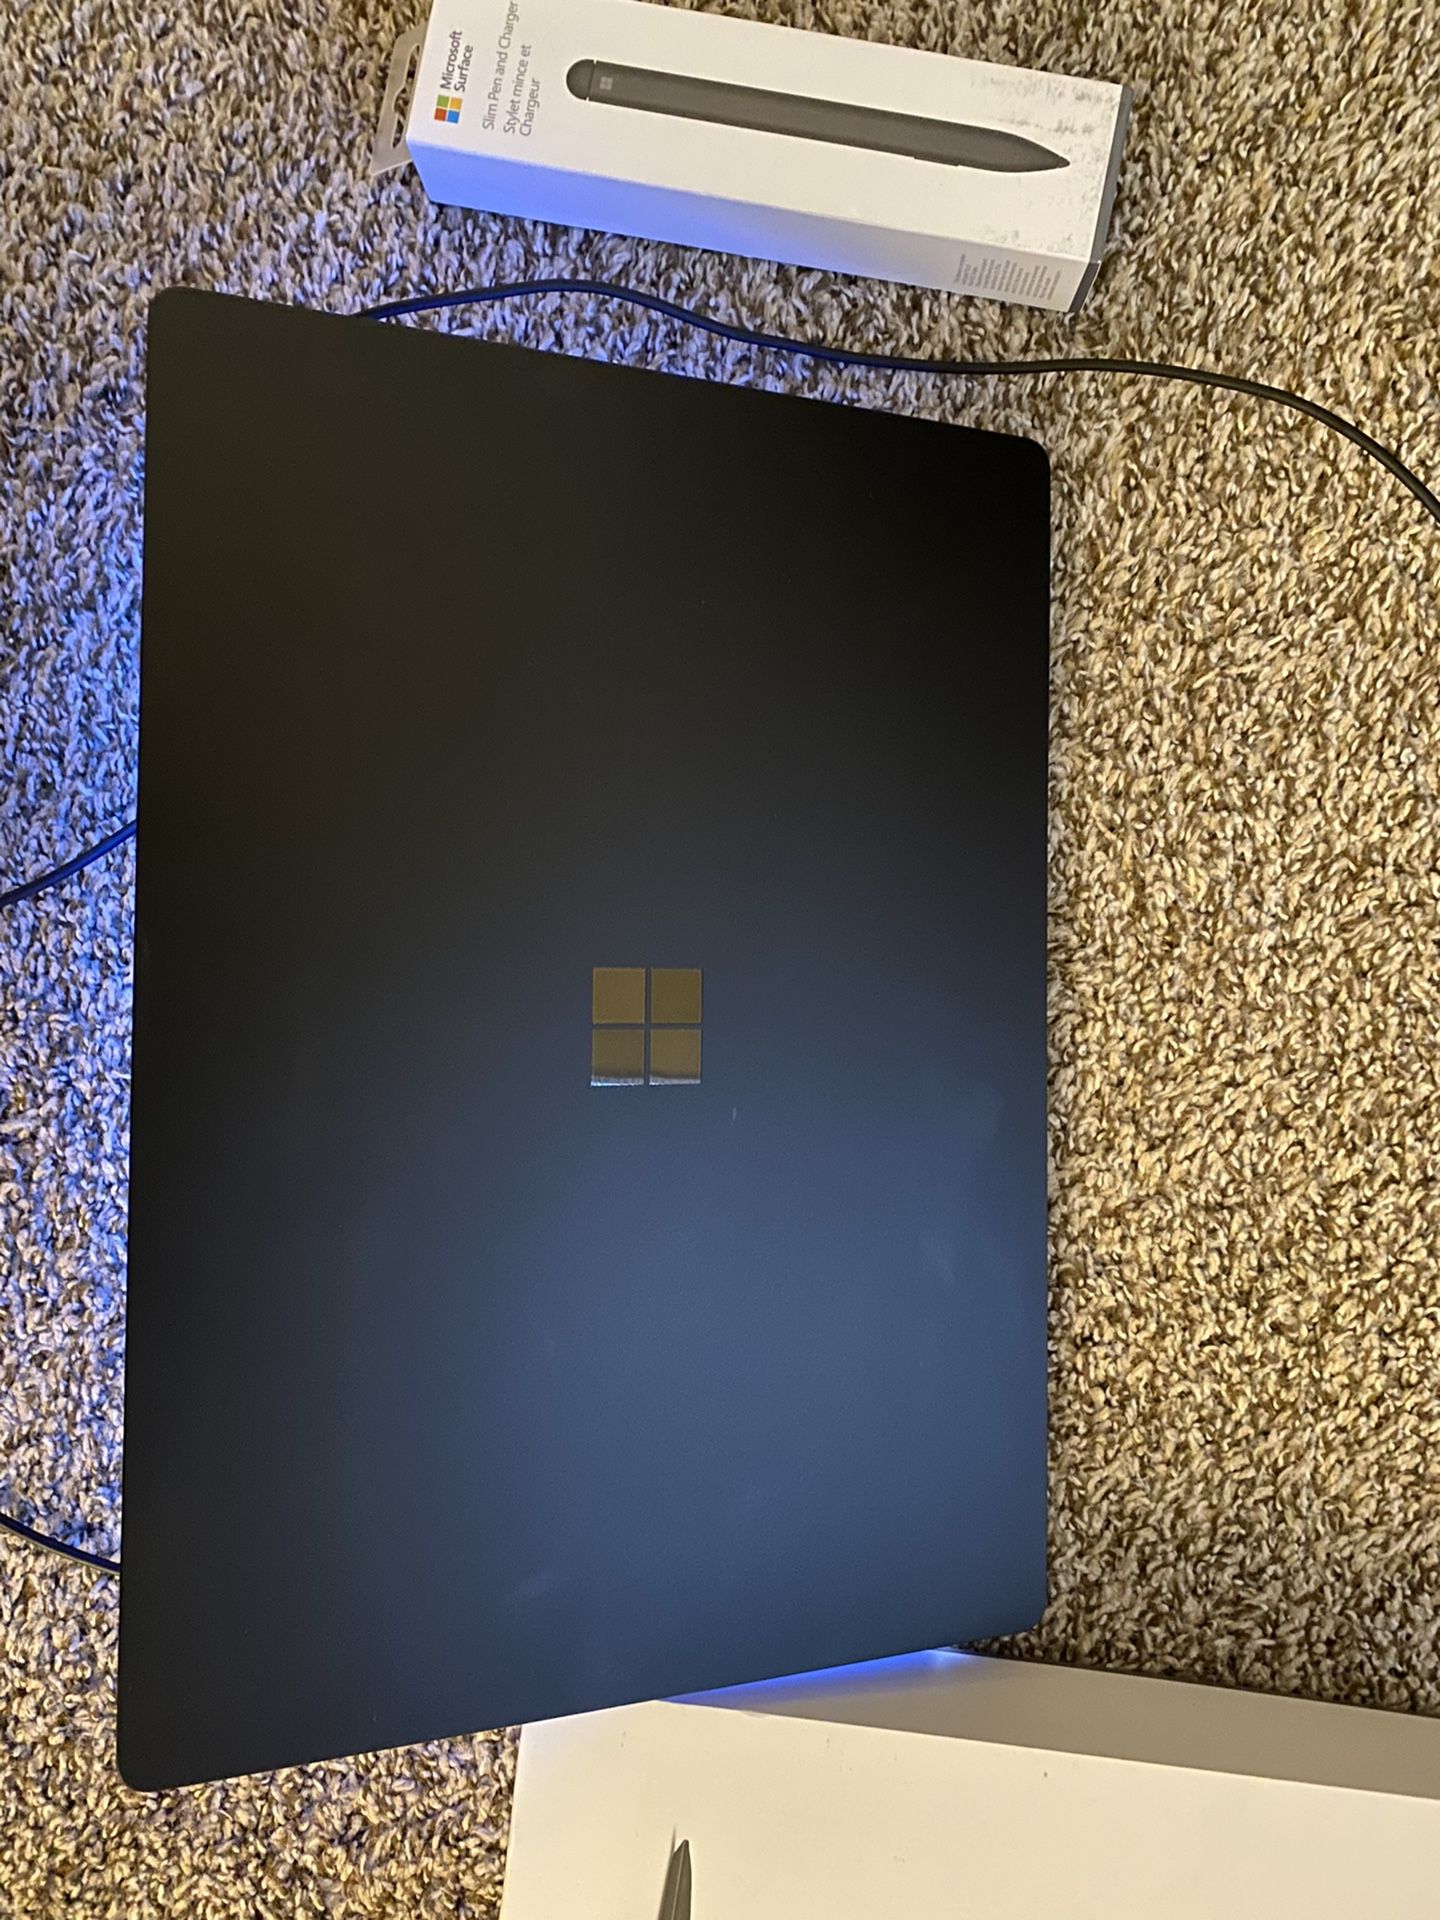 Microsoft surface laptop “15